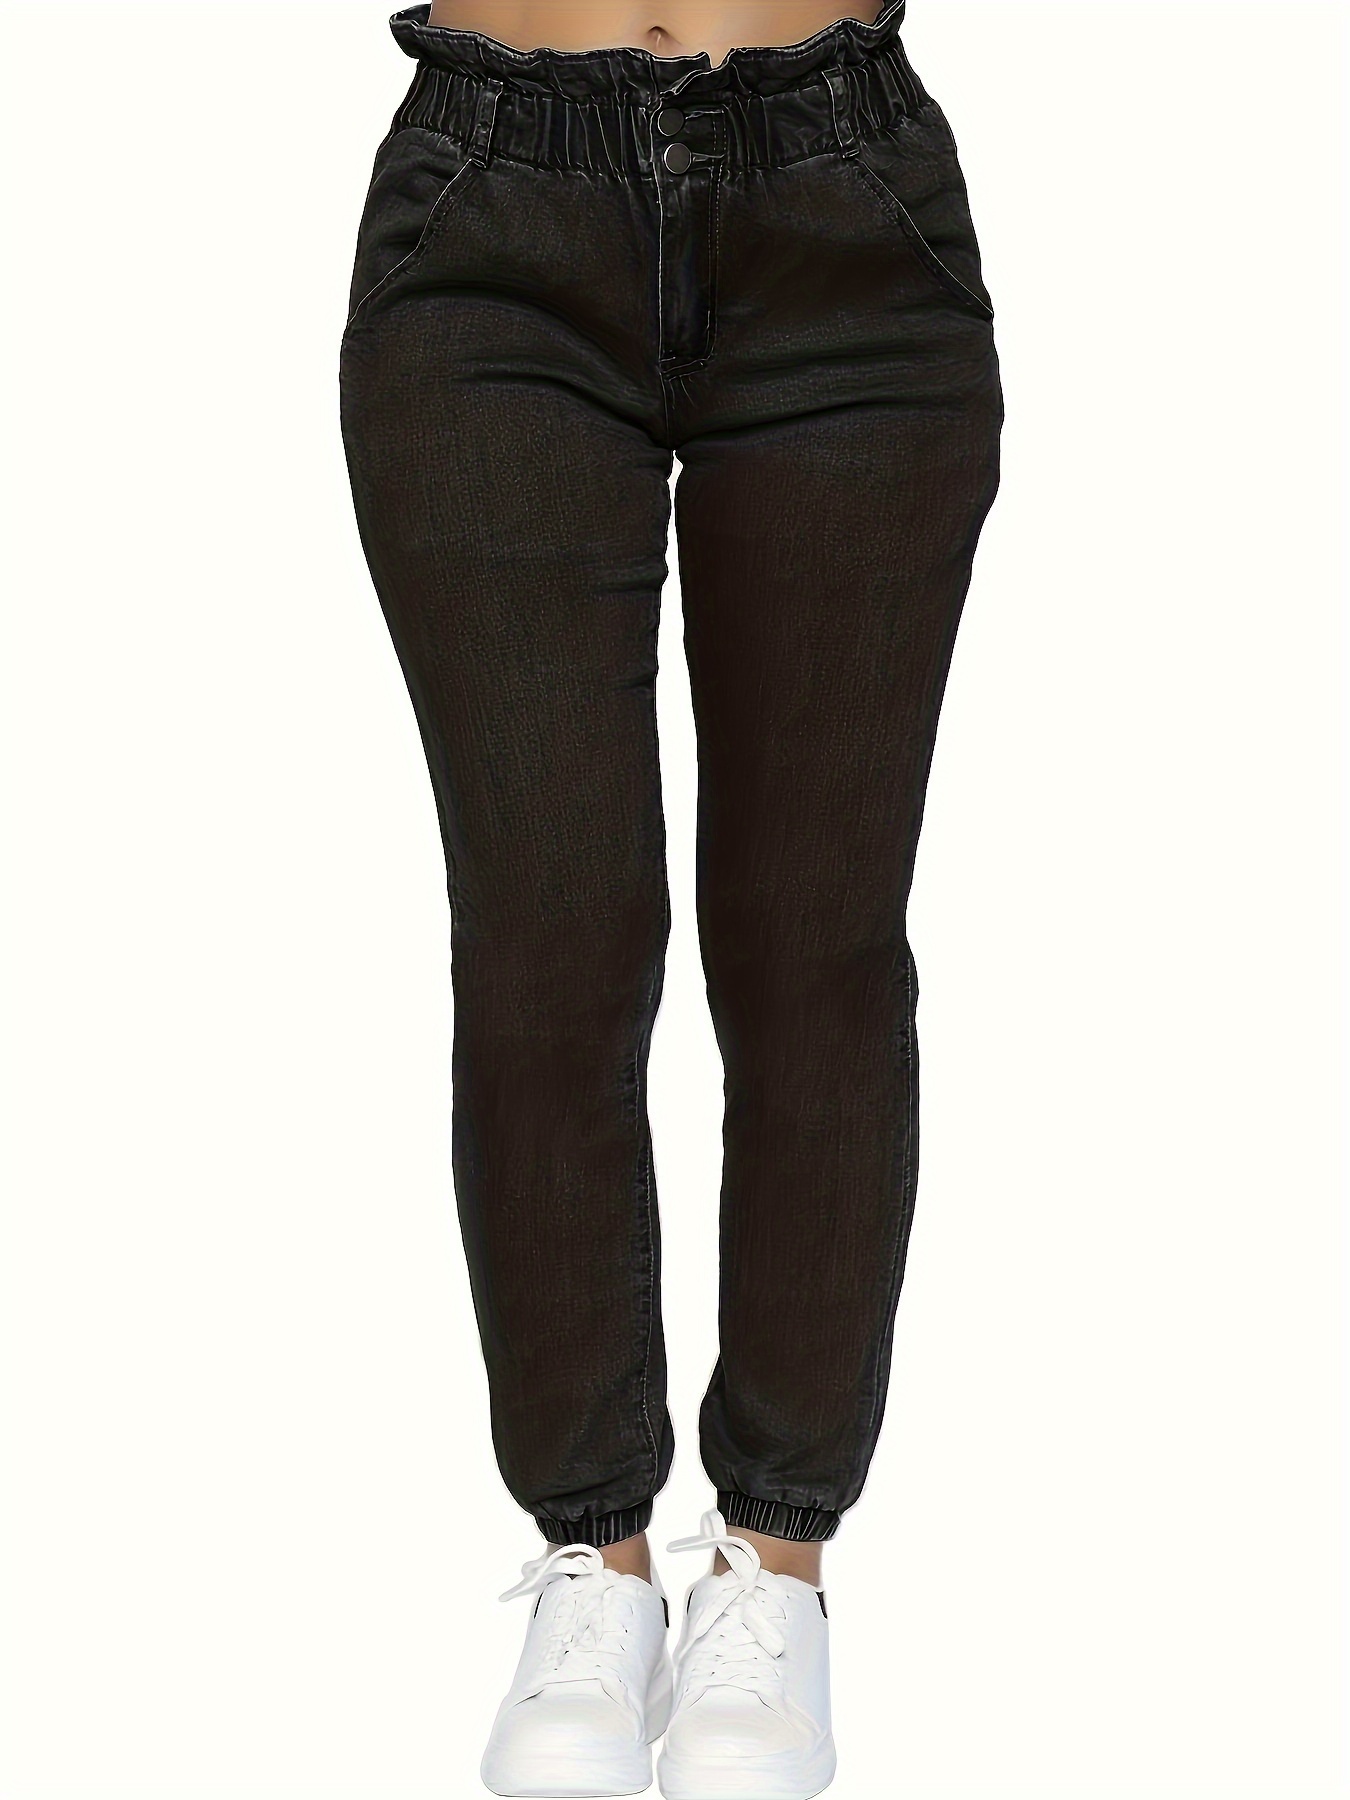  Jeans for Women Women's Pants Slant Pocket Jogger